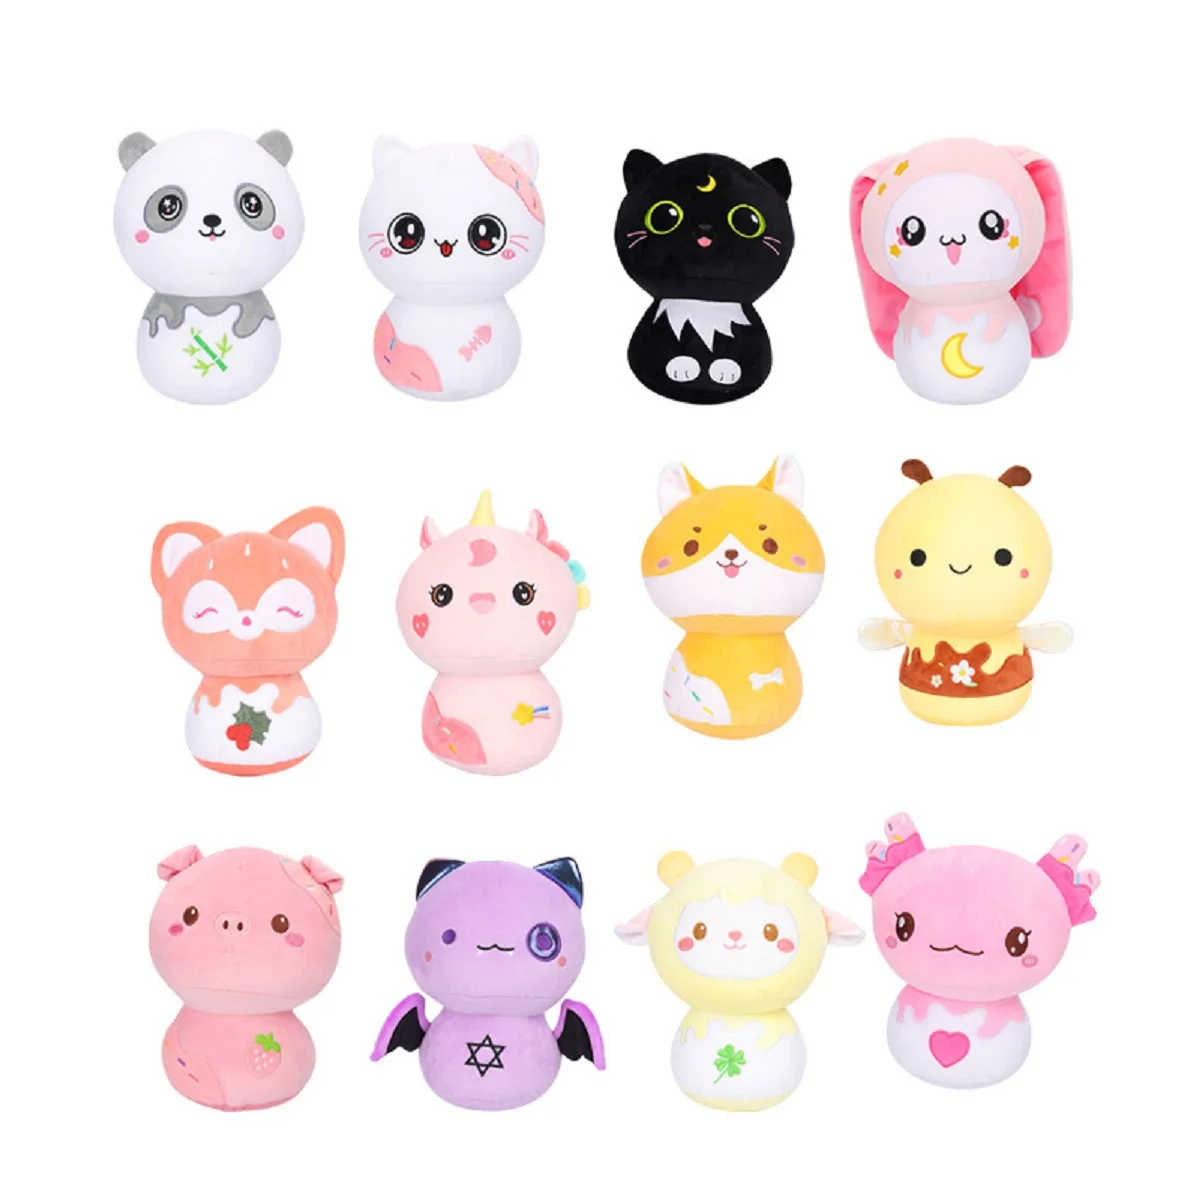 

2023 New 20cm Cute Mushroom Pillow Kawaii Plush Toy Stuffed Animals Plushies Cat Axolotl Rabbit Panda Cat Pig Plush Pillow Gifts